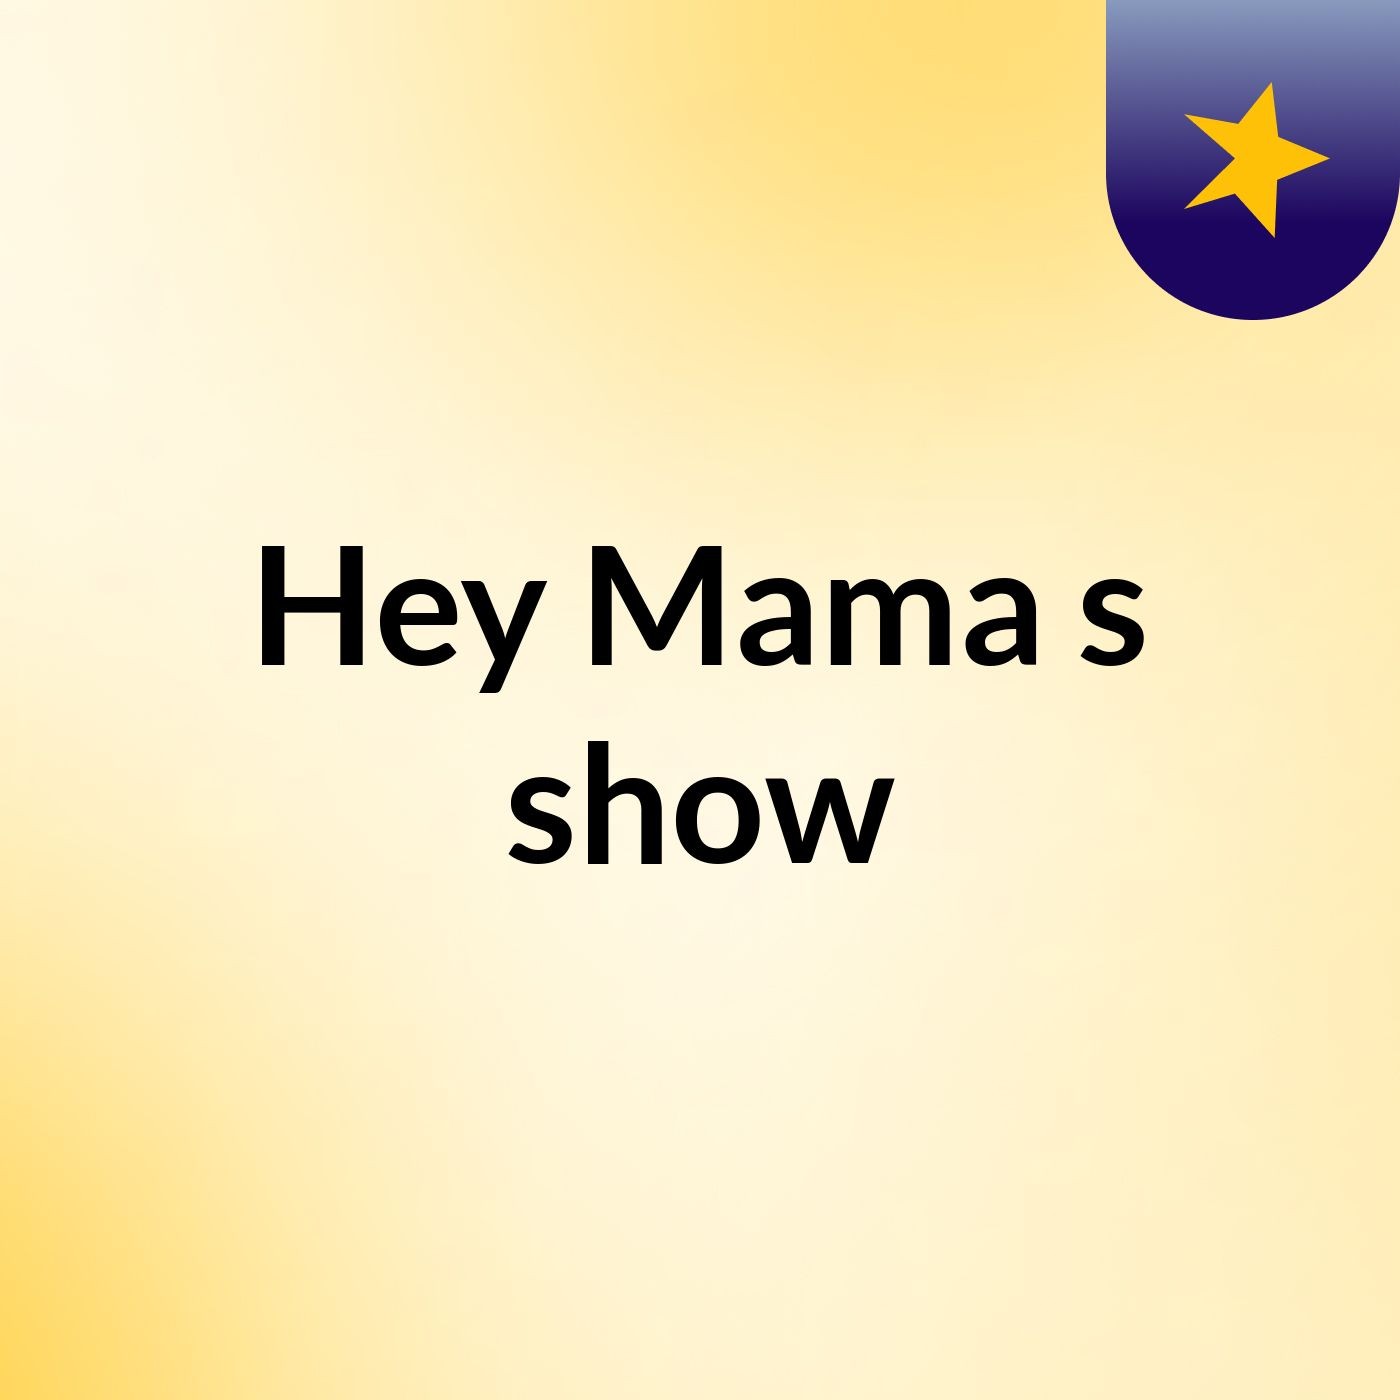 Hey Mama's show